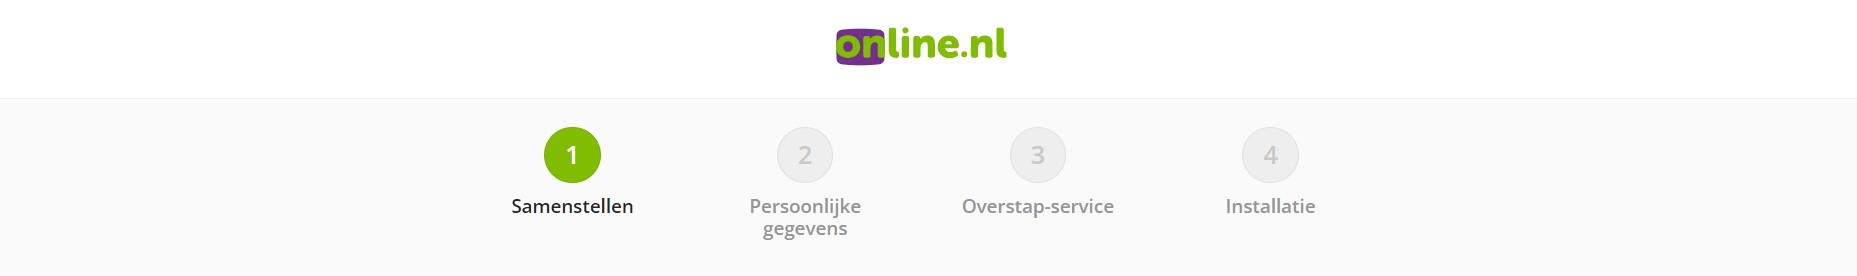 online.nl contact